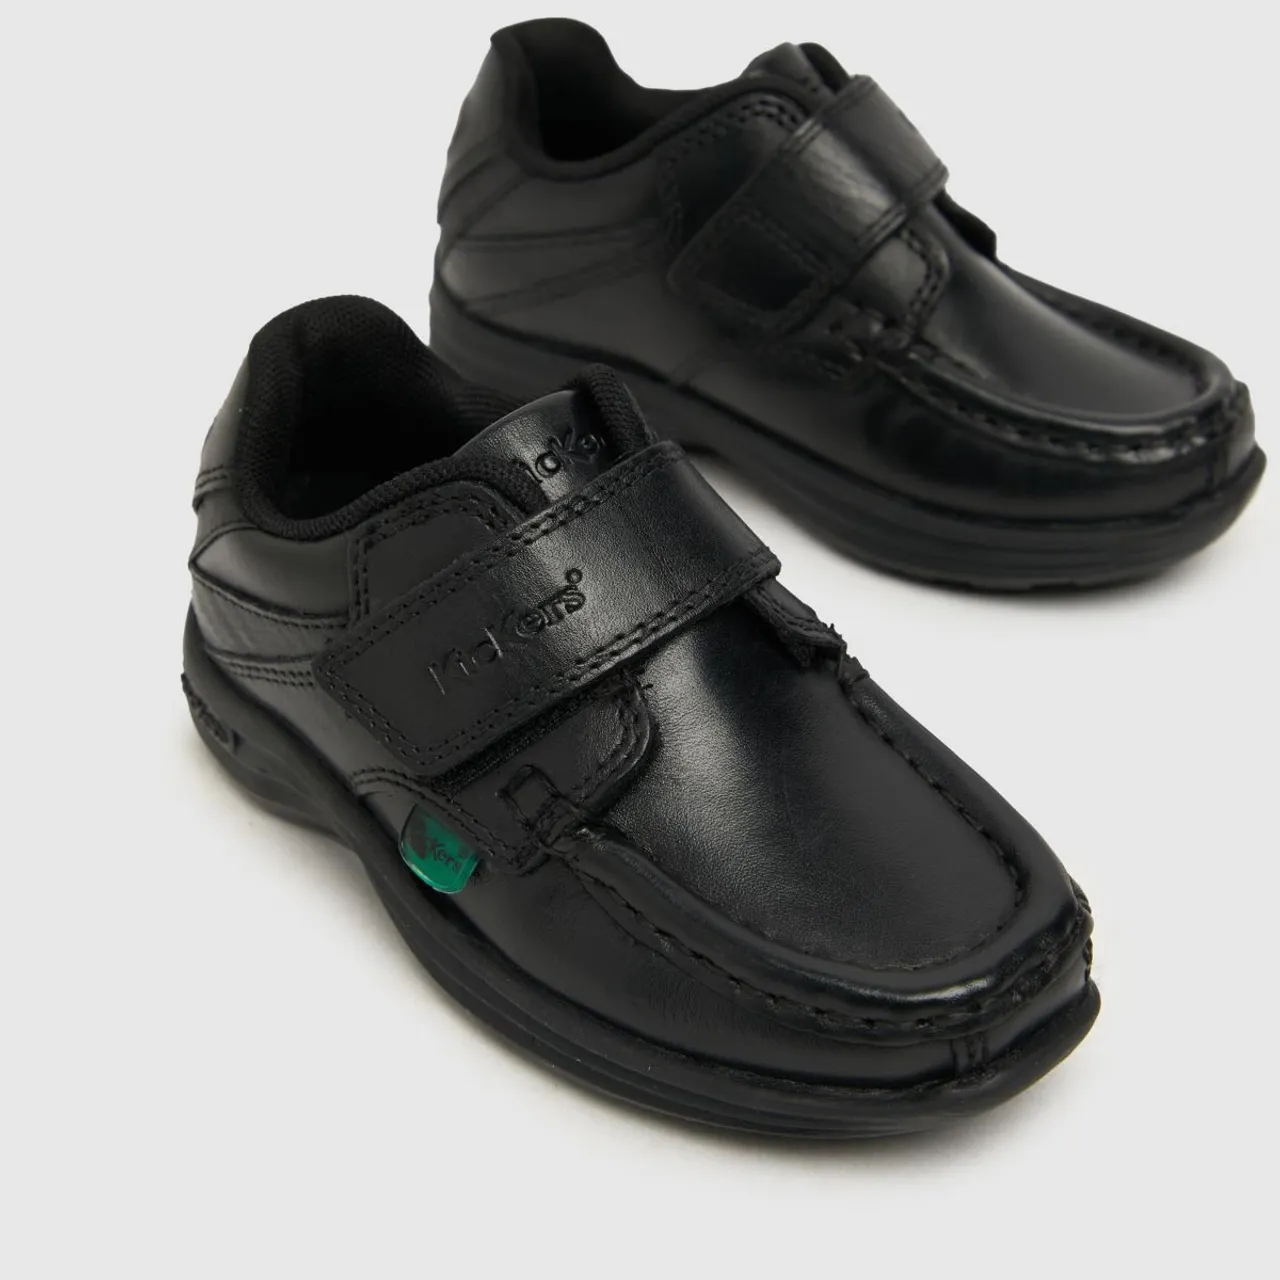 Kickers Black Reasan Strap Boys Toddler Shoes